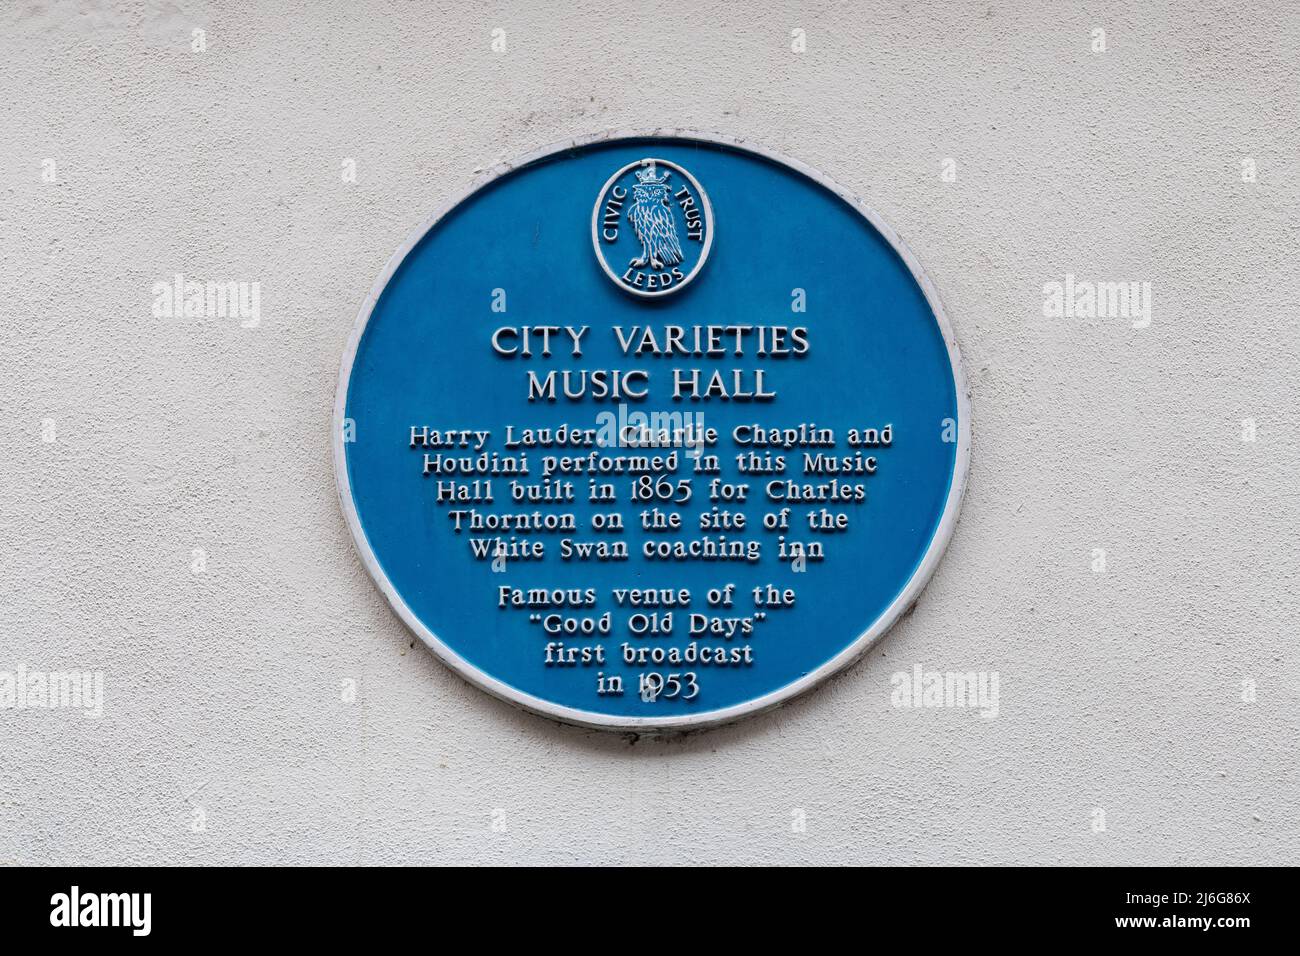 City Varieties Music Hall famous venue of the 'Good Old Days' Leeds Civic Trust blue plaque - Leeds Stock Photo